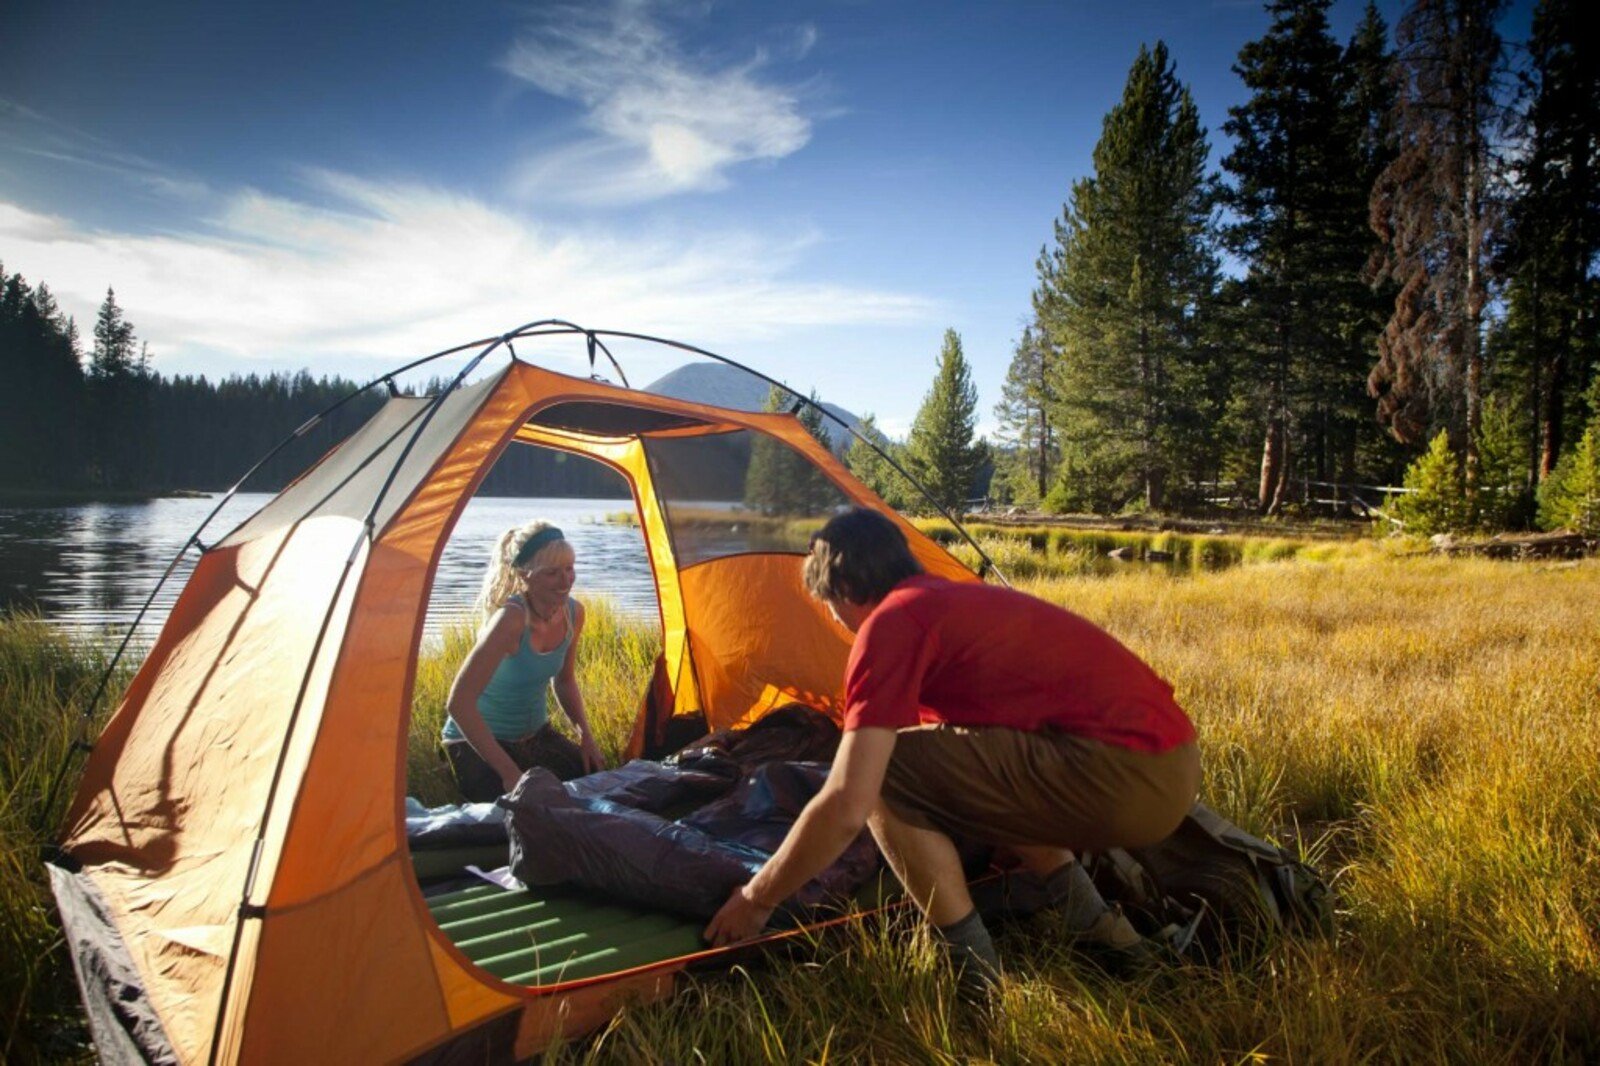 When we go camping. Палатка Camping Tents 2905. Поход с палатками. Туризм с палатками. Люди в палатке.